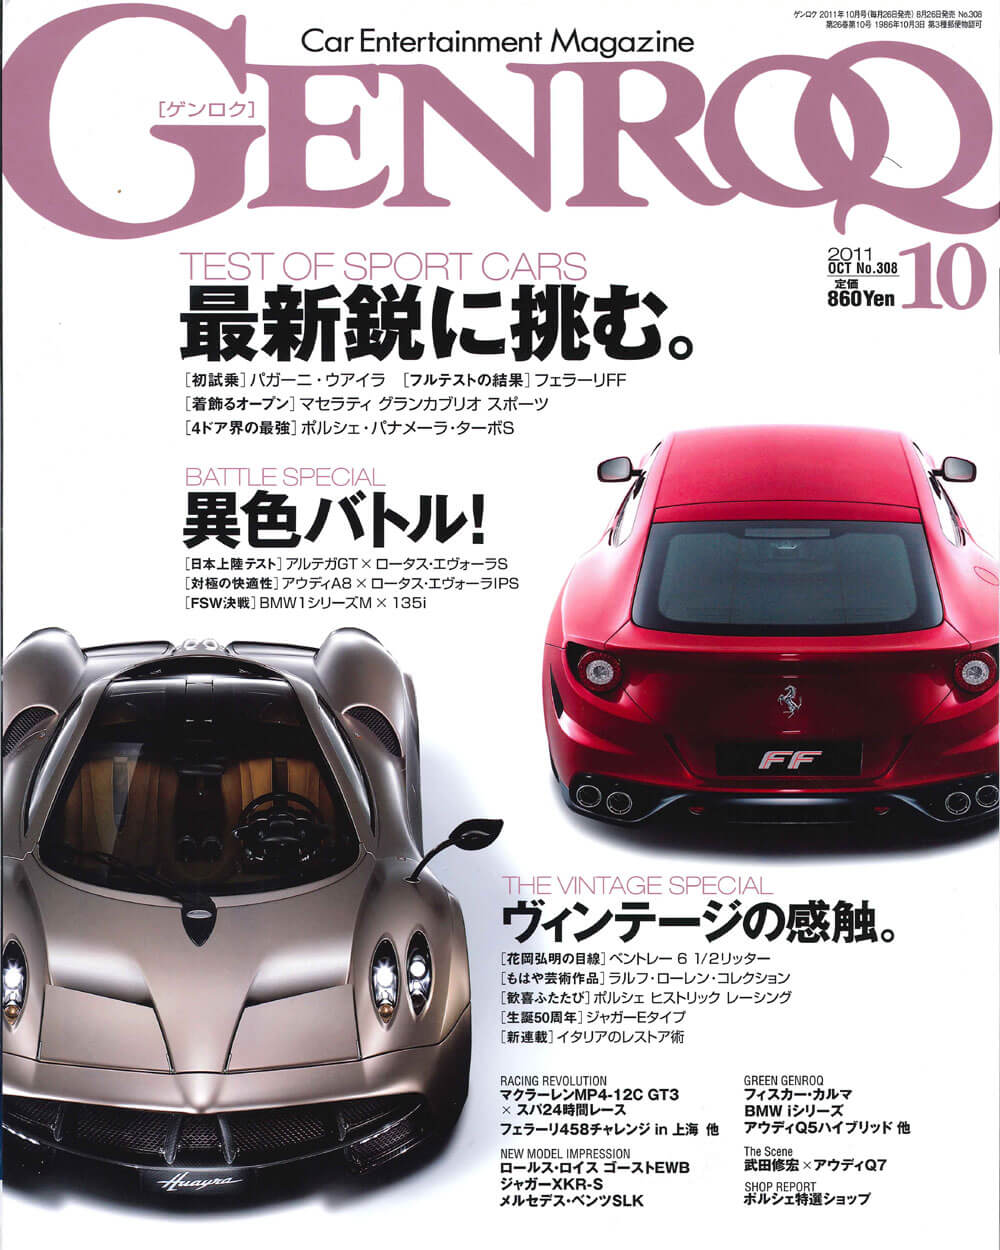 GENROQ Oct. issue